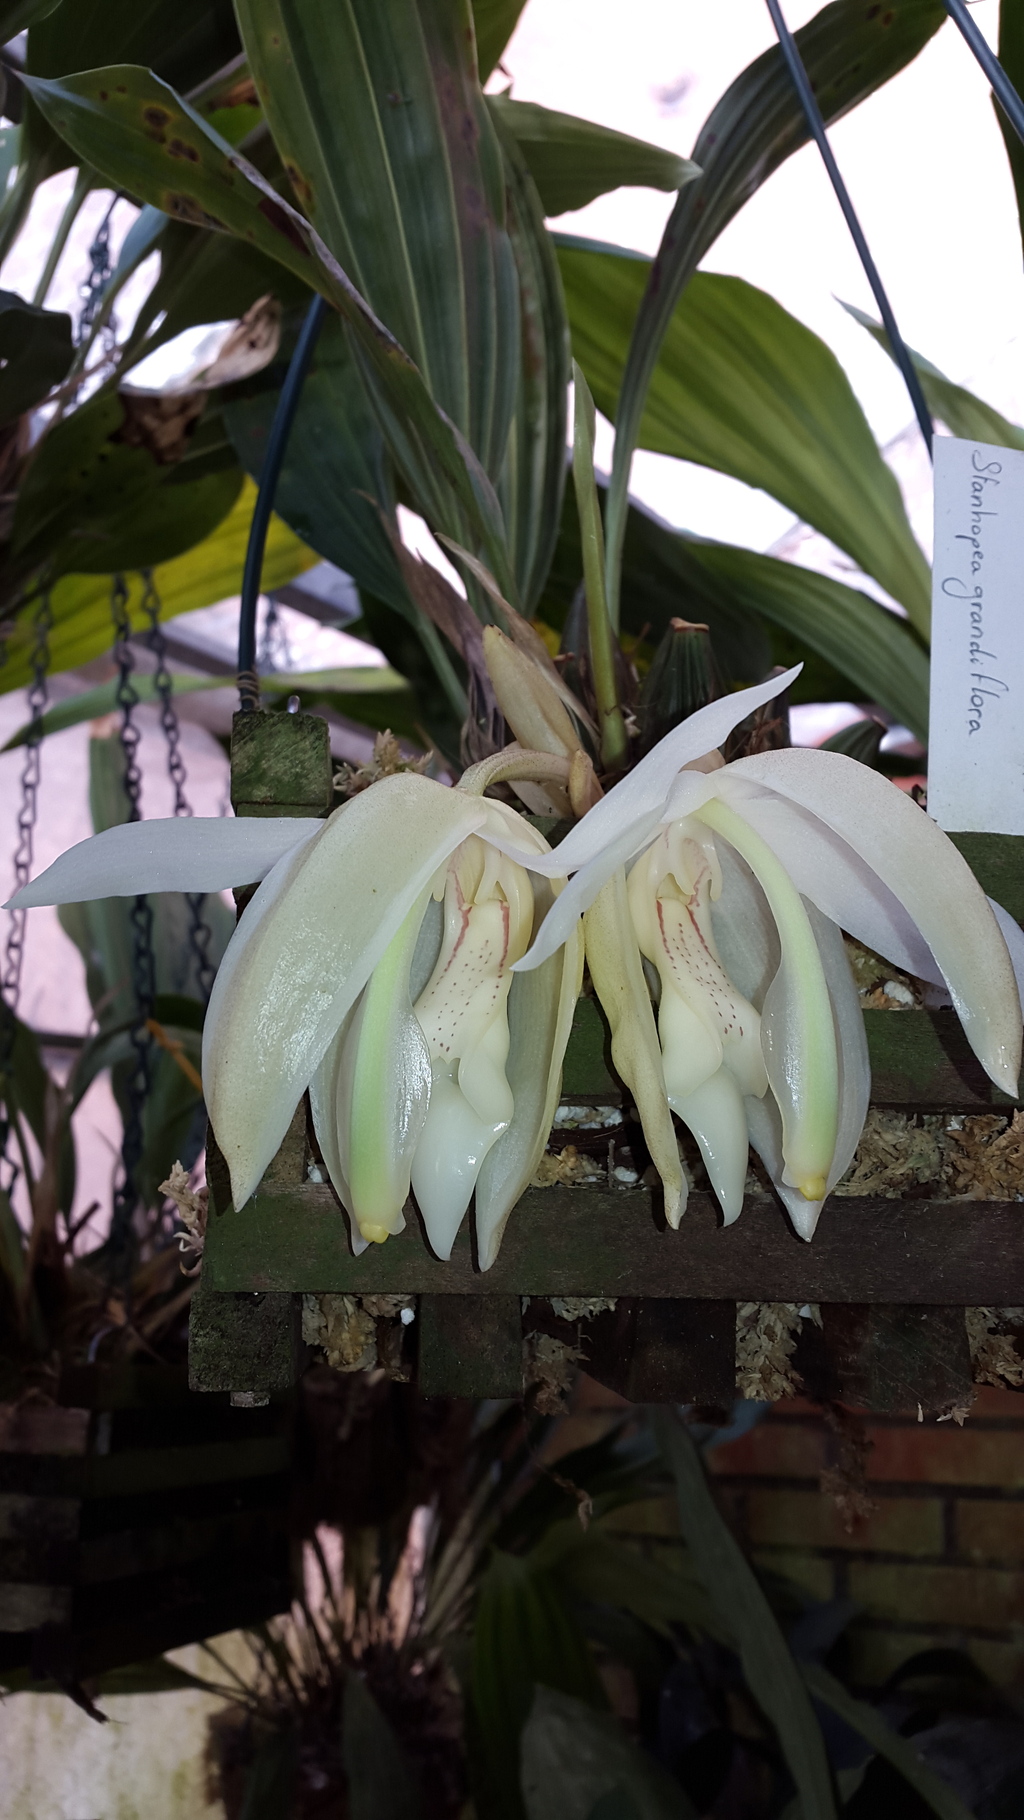 Bluht jetzt, stanhopea grandiflora 20151025_142528_zpscephjs9n